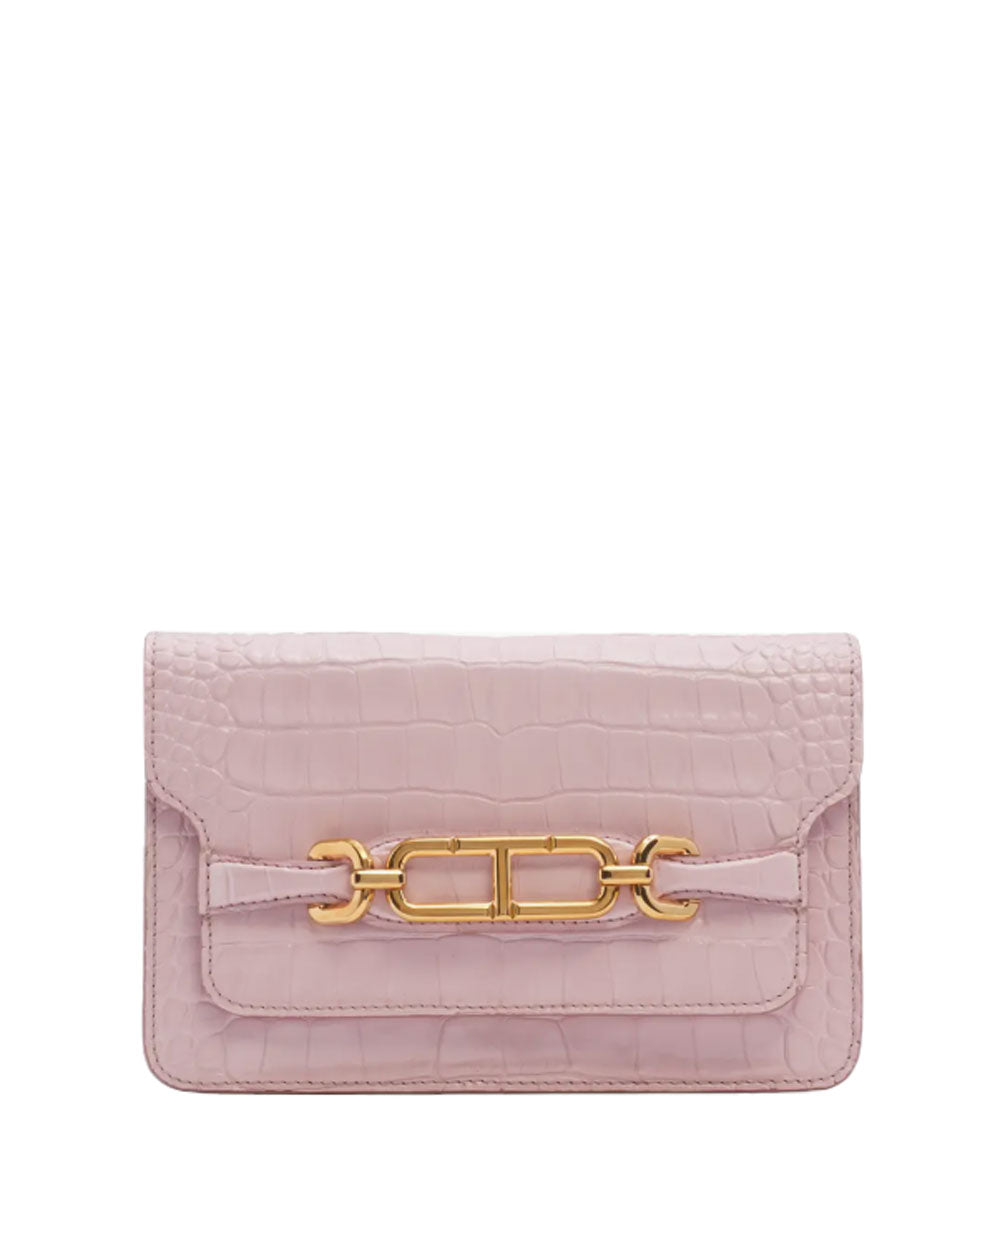 Stamped Crocodile Whitney Shoulder Bag in Pastel Pink